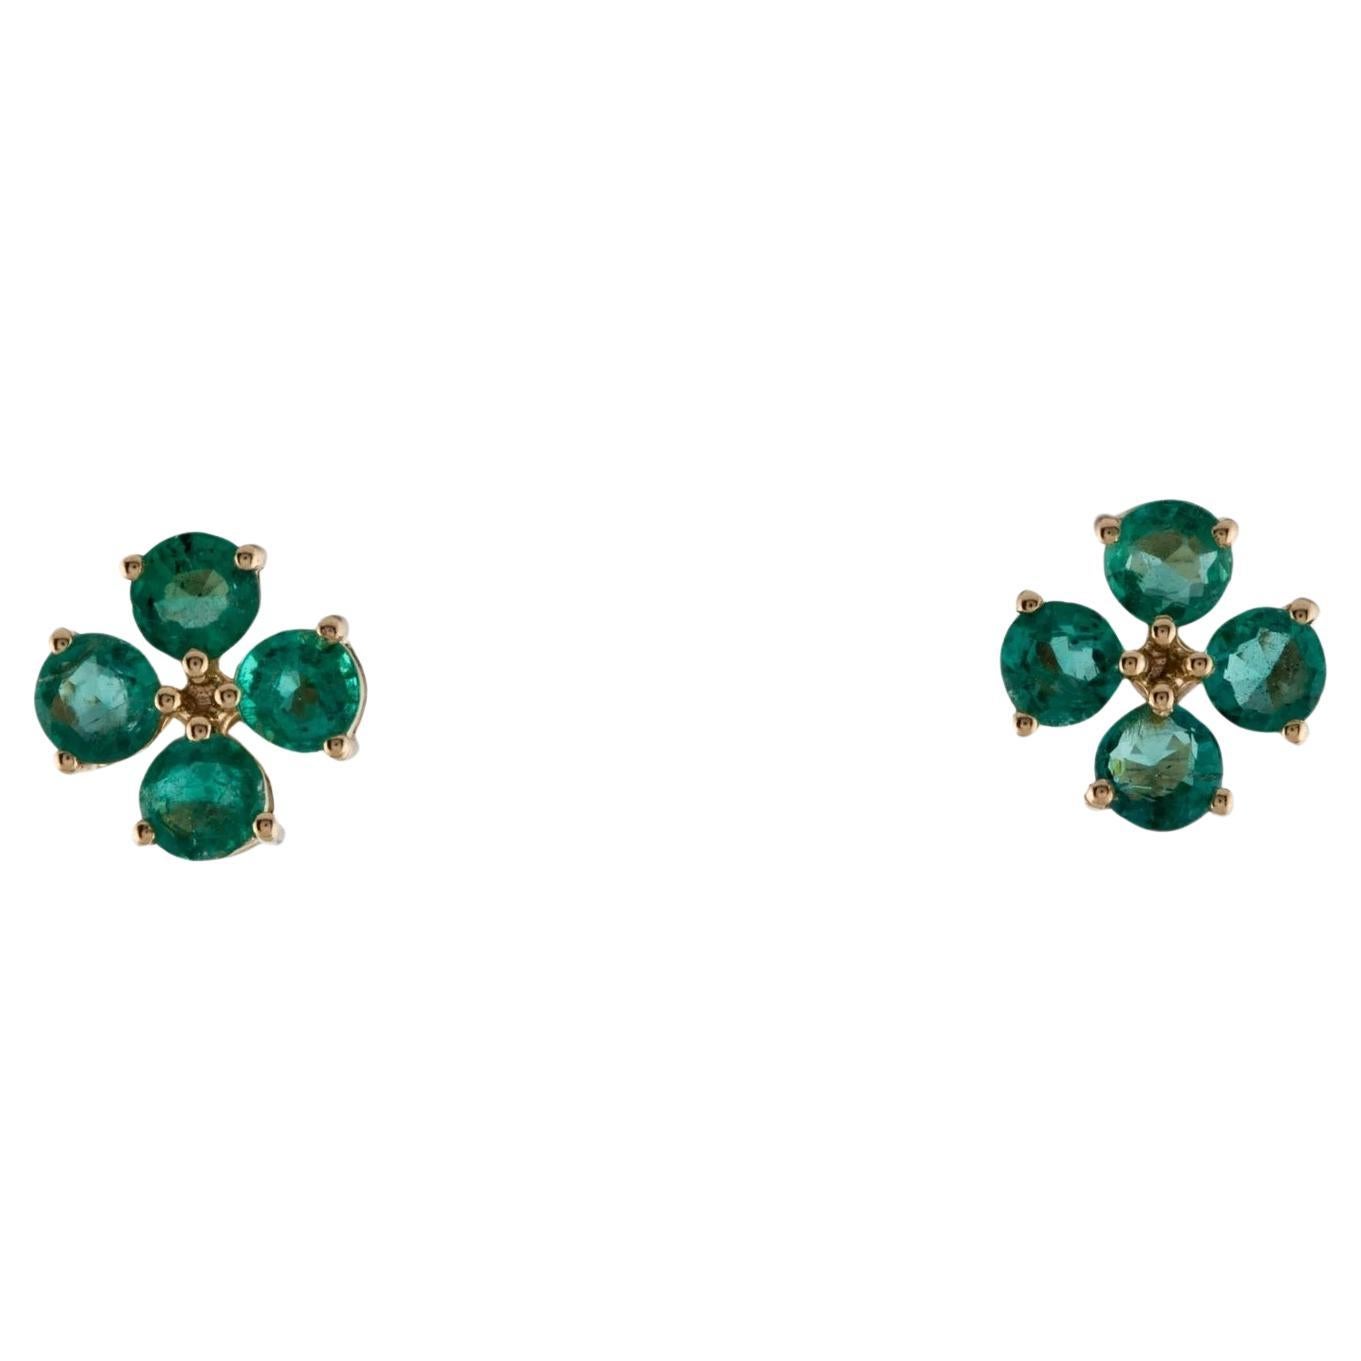 14K Emerald Stud Earrings  1.97 Carat Round Faceted Gemstones  Maker's Mark